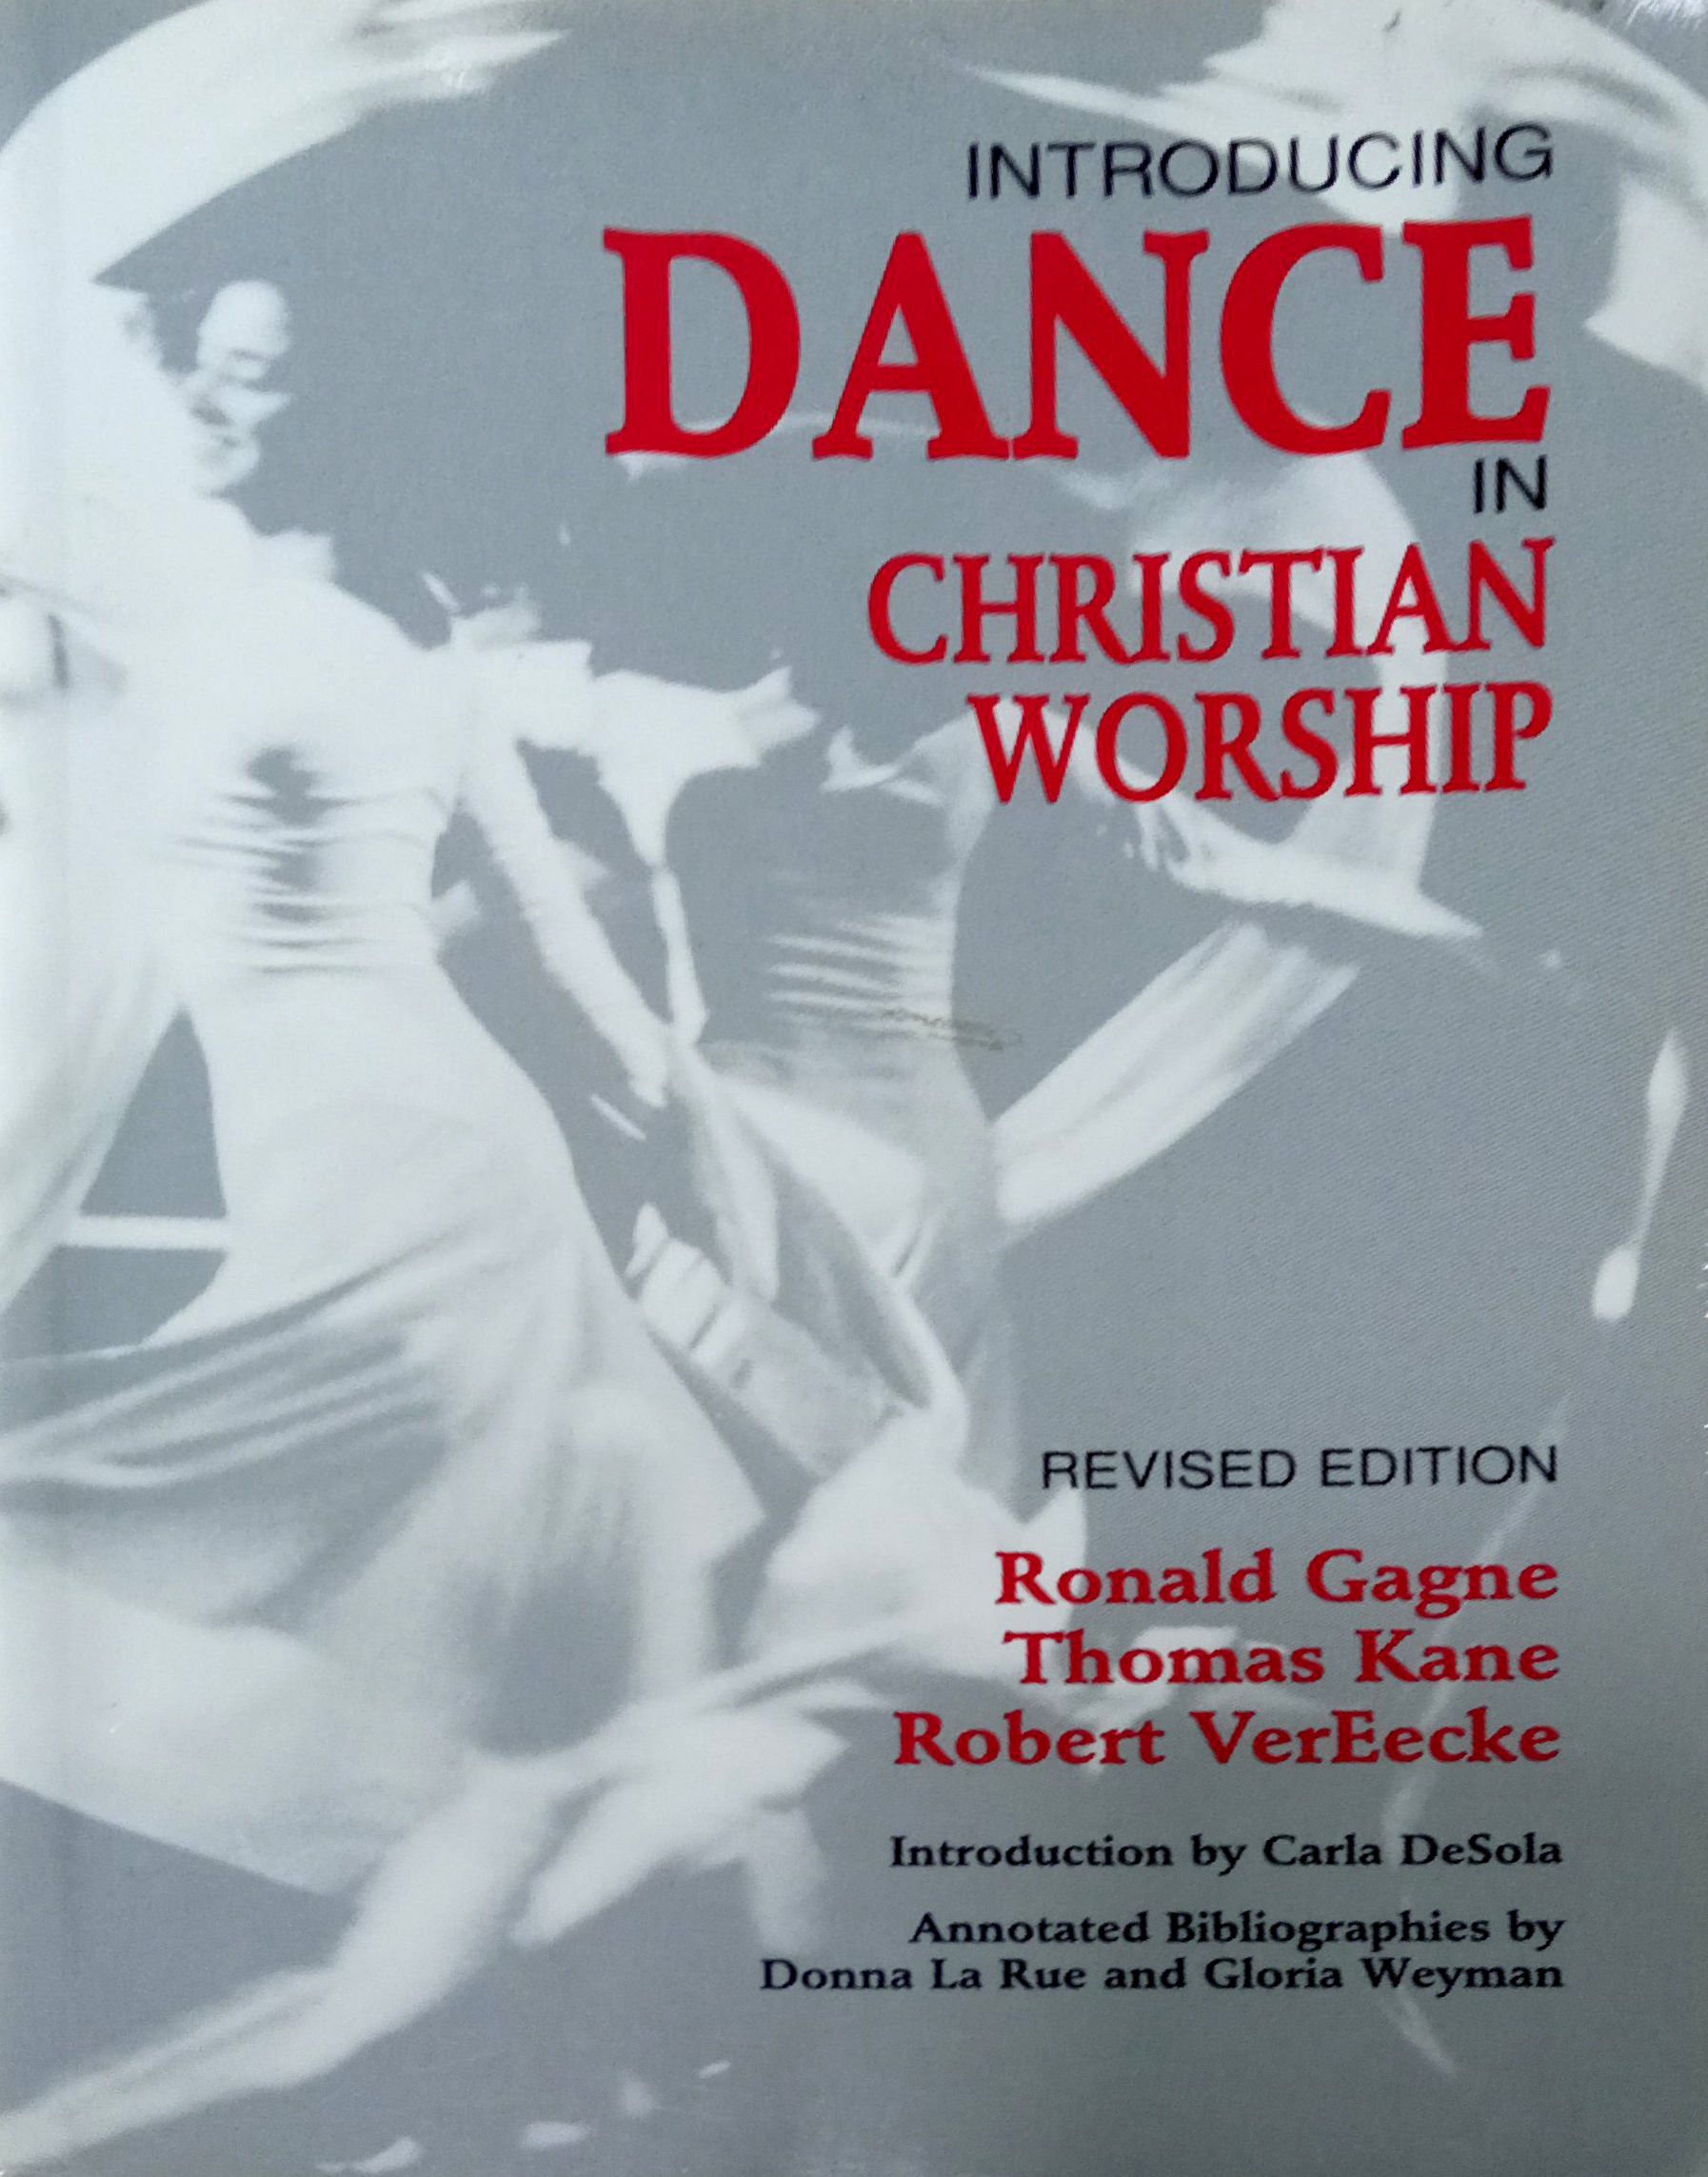 INTRODUCING DANCE IN CHRISTIAN WORSHIP